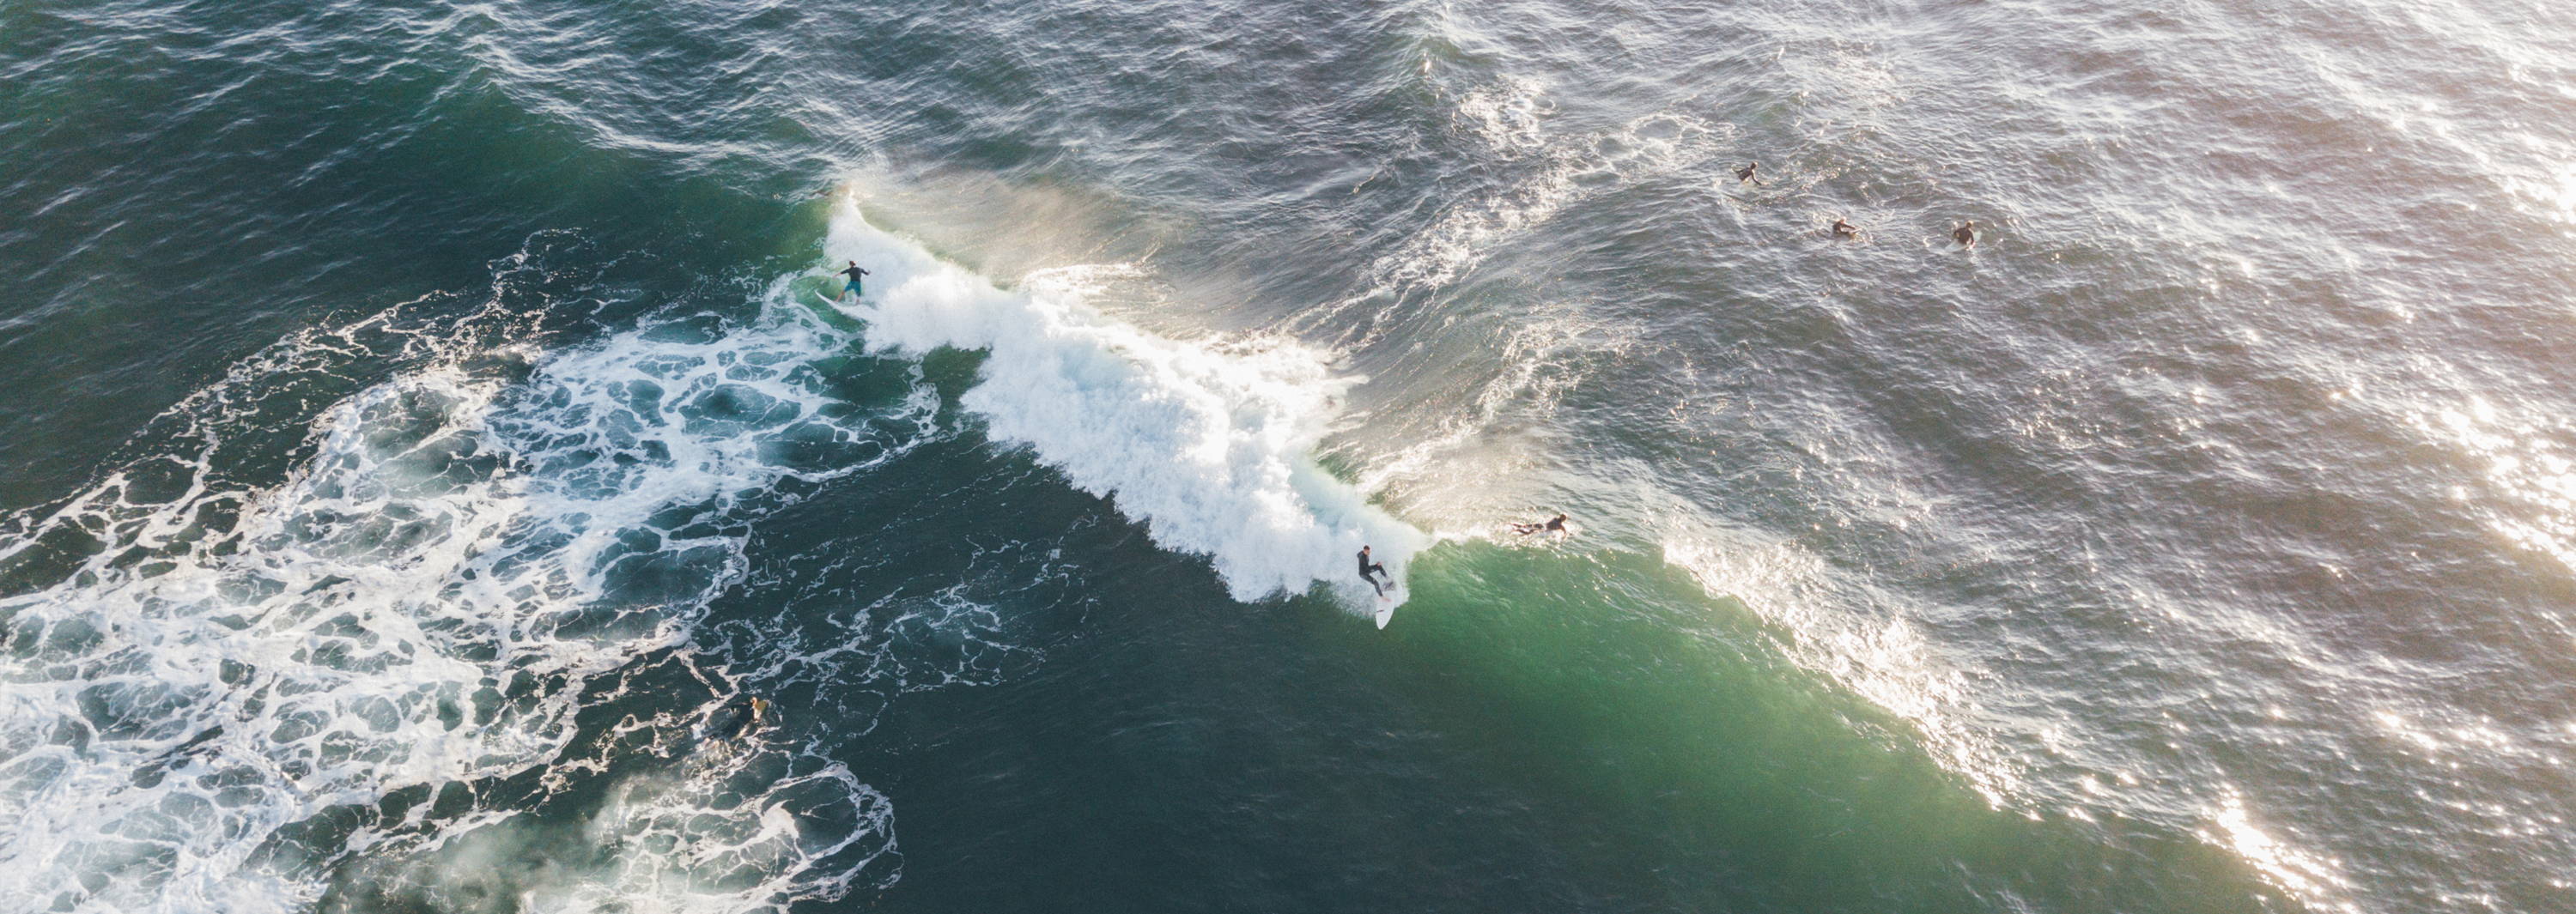 Arial drone view of surfers surfing windandsea in La Jolla, San Diego, California.